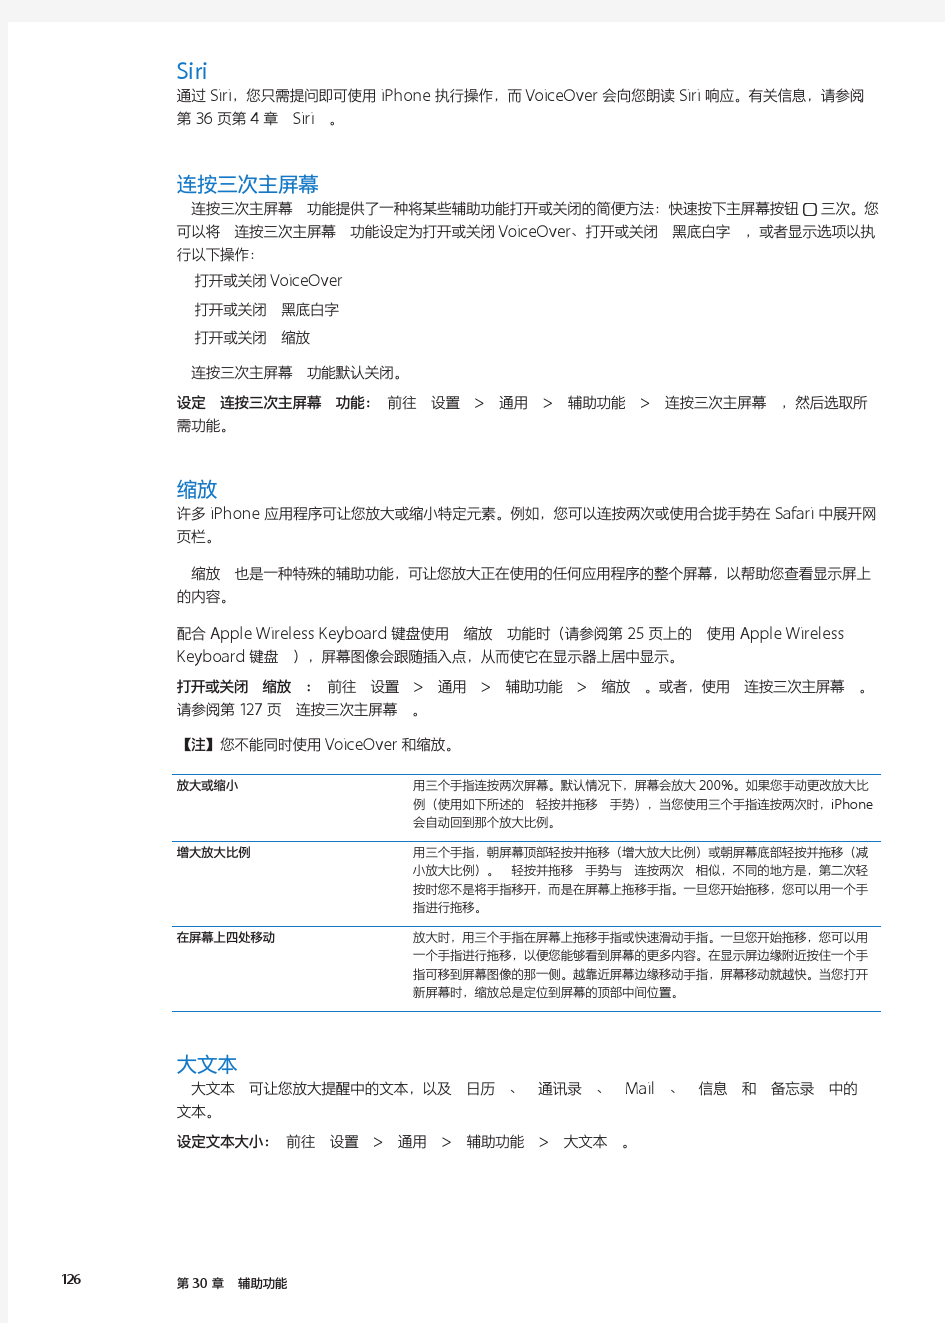 iphone5简体中文版说明书《(共152页)124-152页》第五包